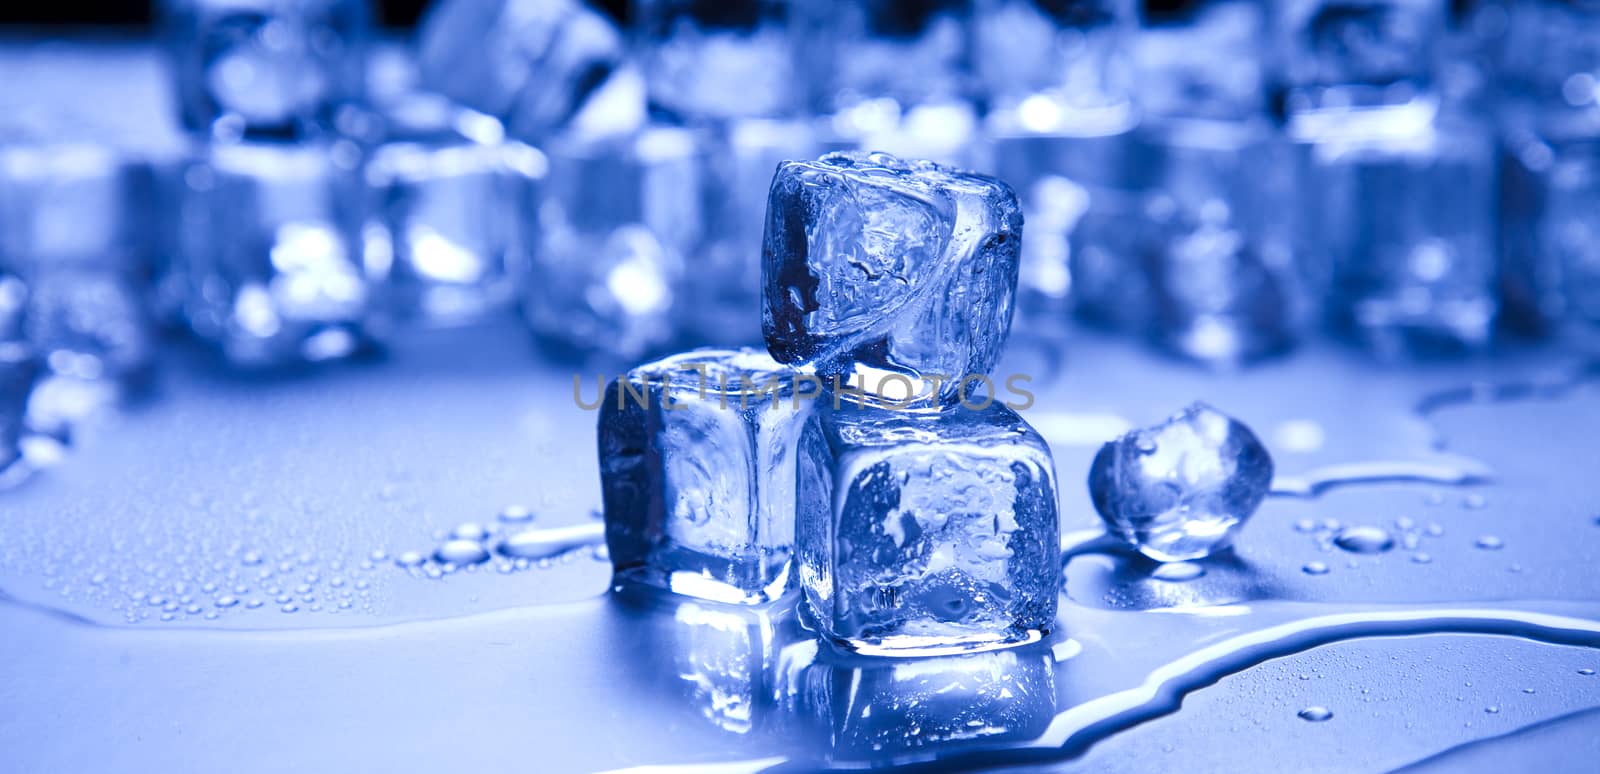 Blue and shiny ice cubes by JanPietruszka